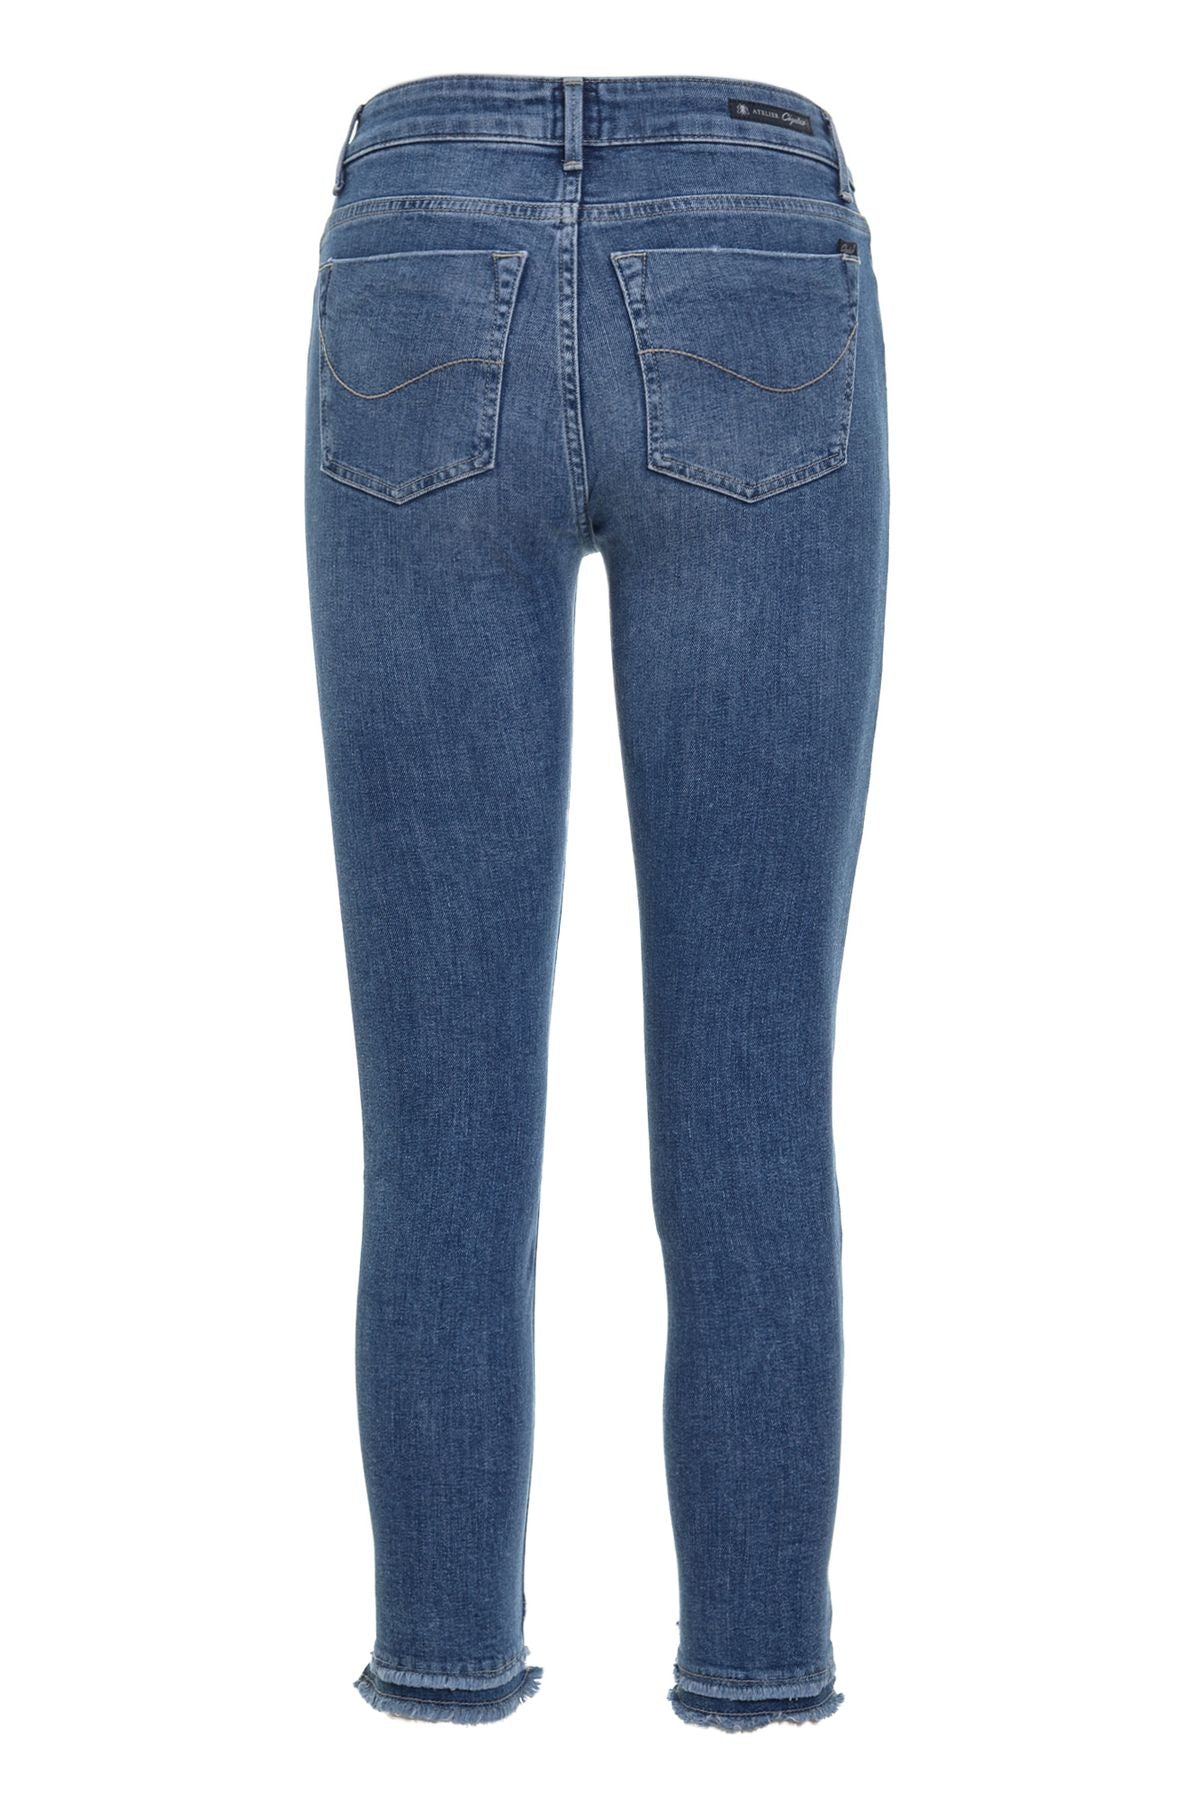 Cigala's Jeans Autunno/Inverno 336tdsb23